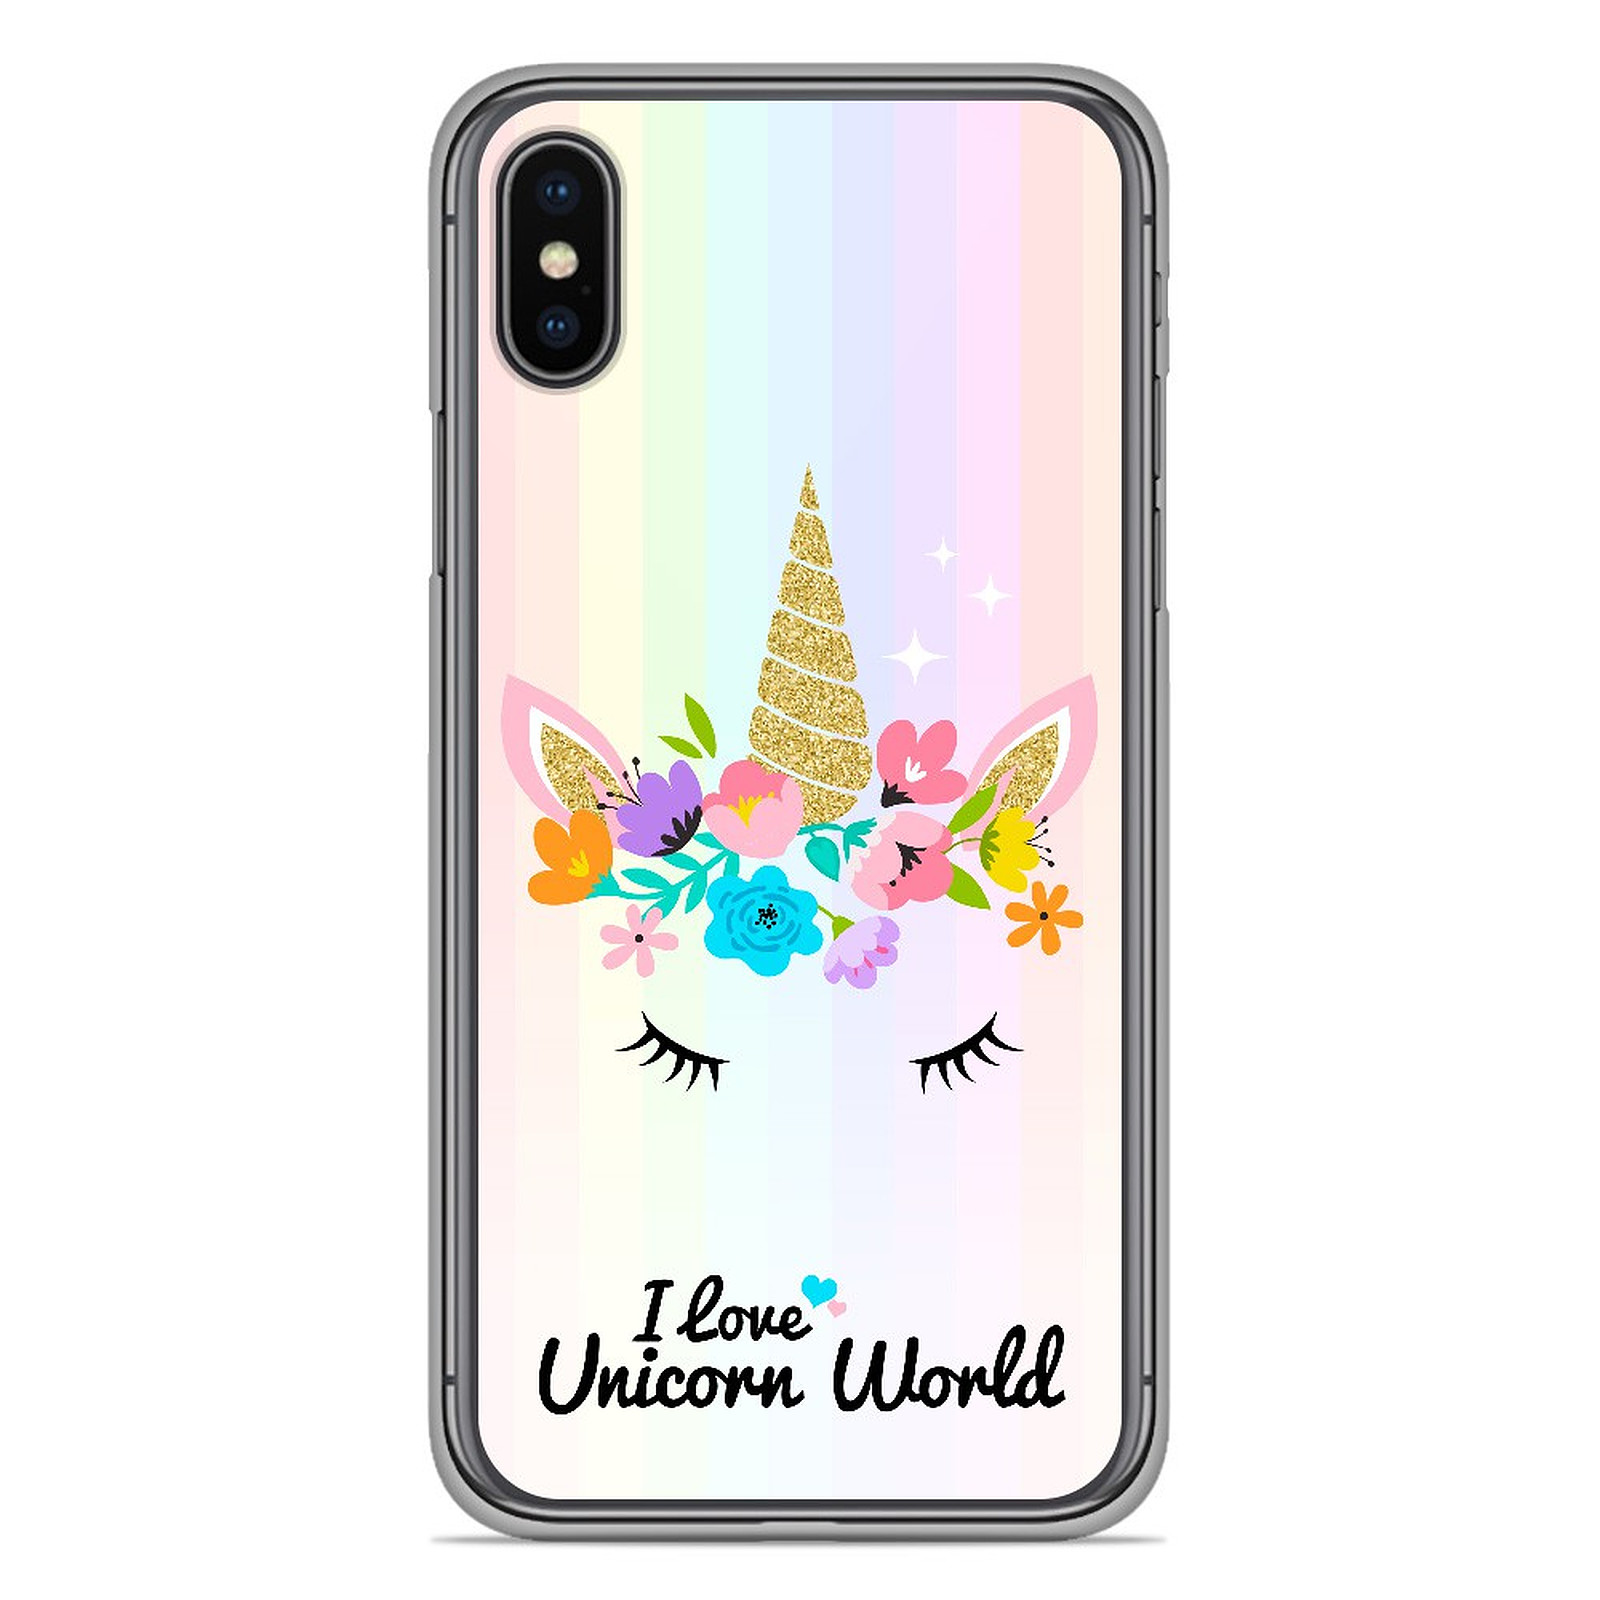 1001 Coques Coque silicone gel Apple iPhone X motif Unicorn World - Coque telephone 1001Coques